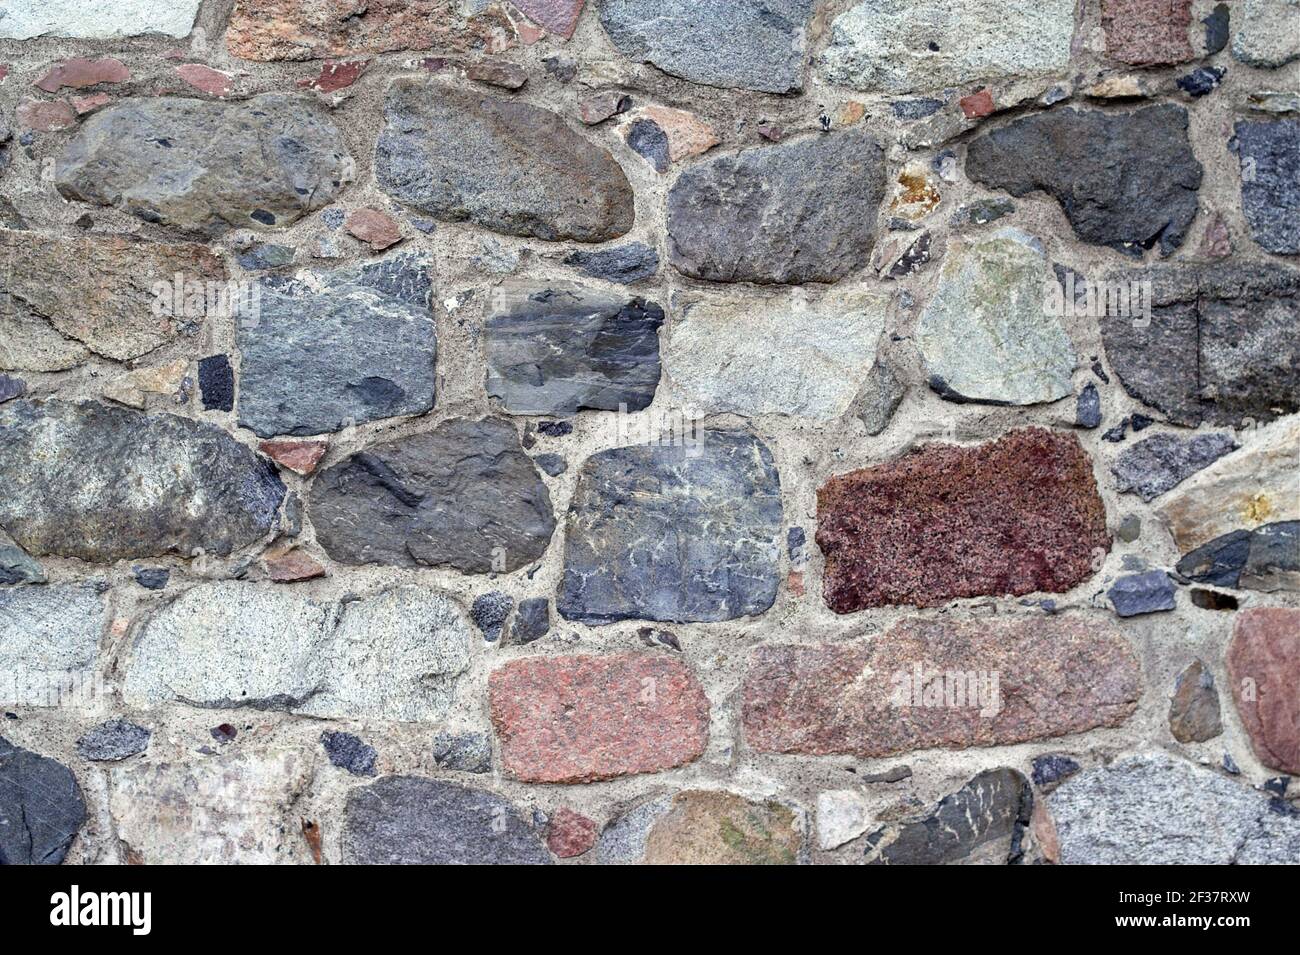 Gammelstad, Sweden, Schweden; A wall made of large, multi-colored stones. Eine Wand aus großen, bunten Steinen. Un muro de grandes piedras de colores. Stock Photo